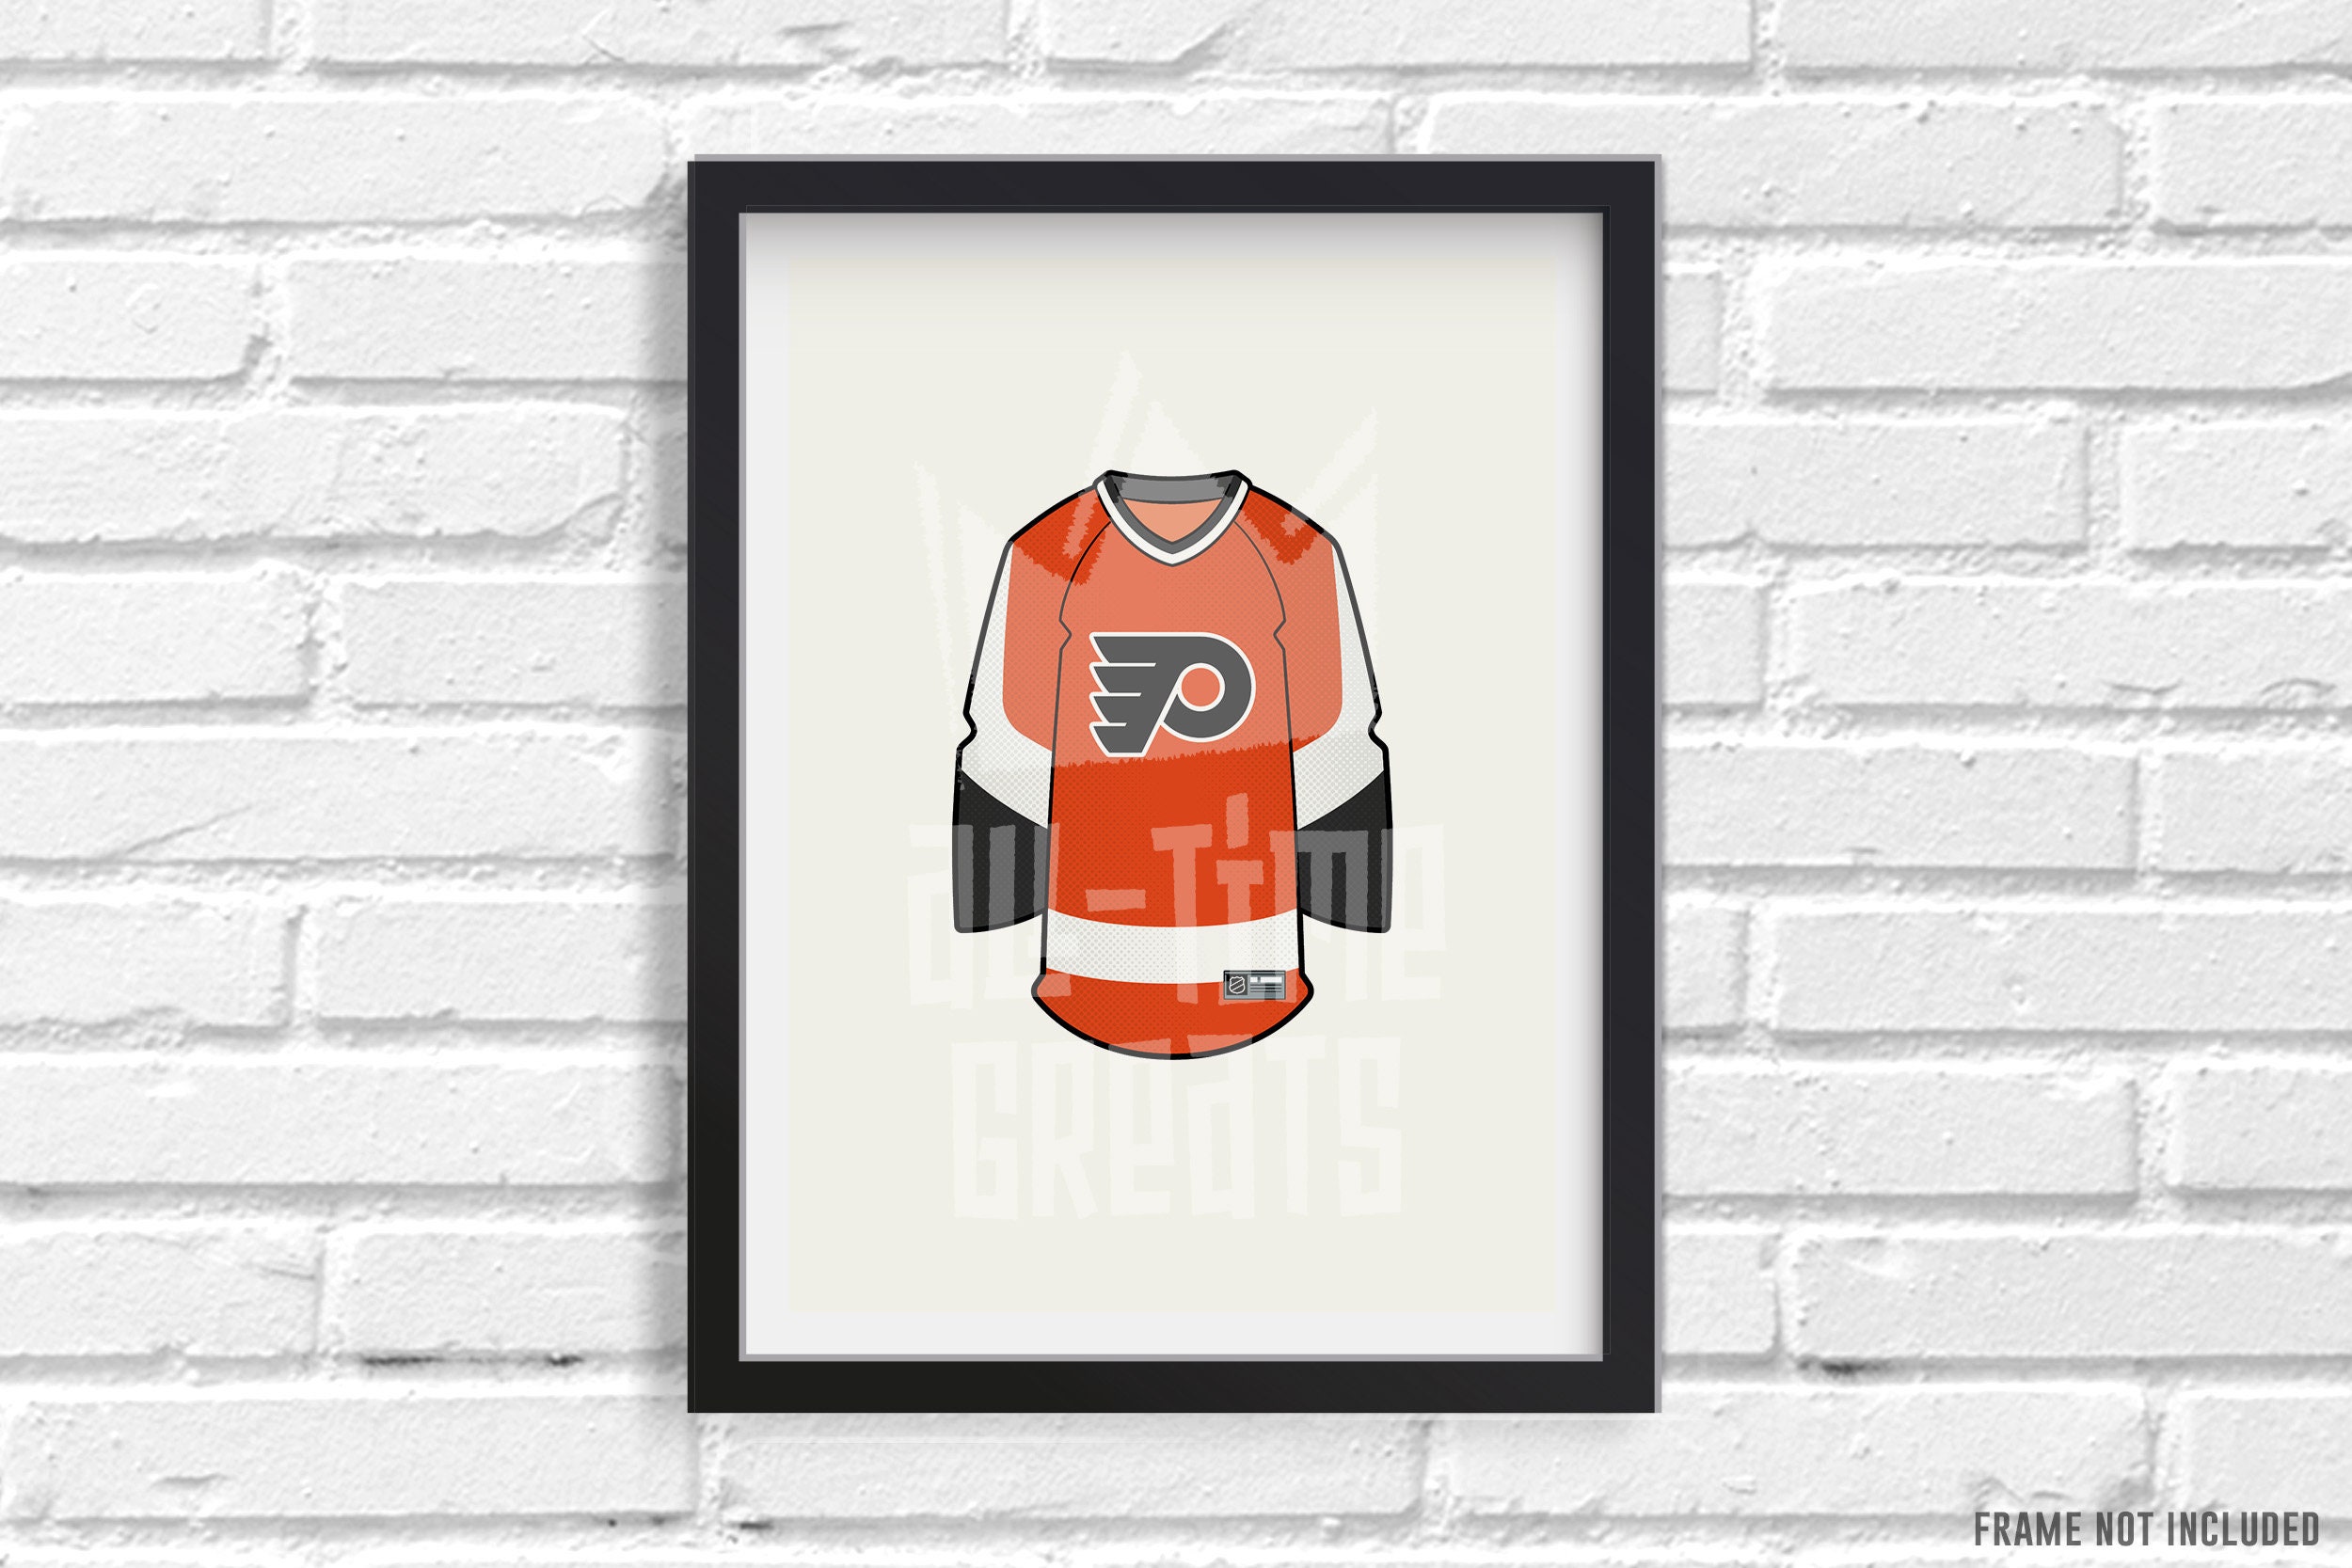 00 Gritty (Philadelphia Flyers) iPhone X/XS/XR Wallpaper  Philadelphia  flyers hockey, Philadelphia flyers logo, Philadelphia flyers